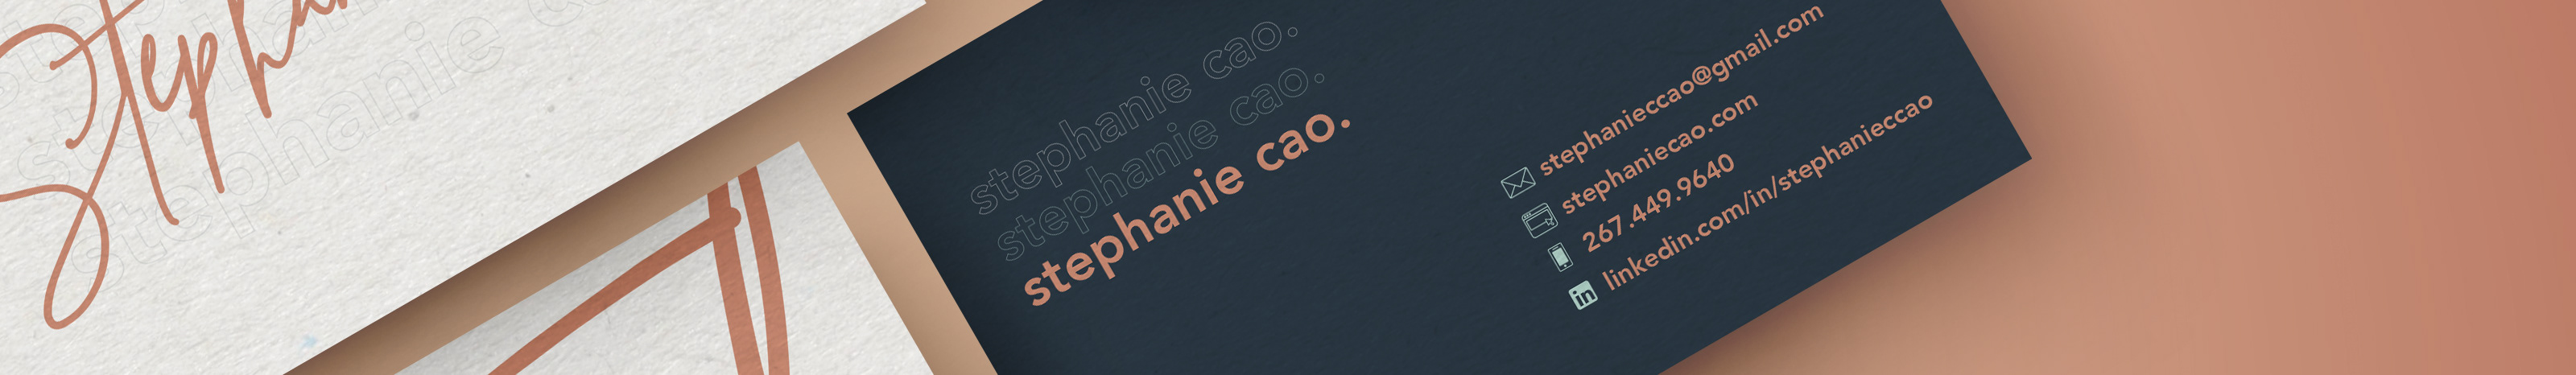 Stephanie Cao's profile banner